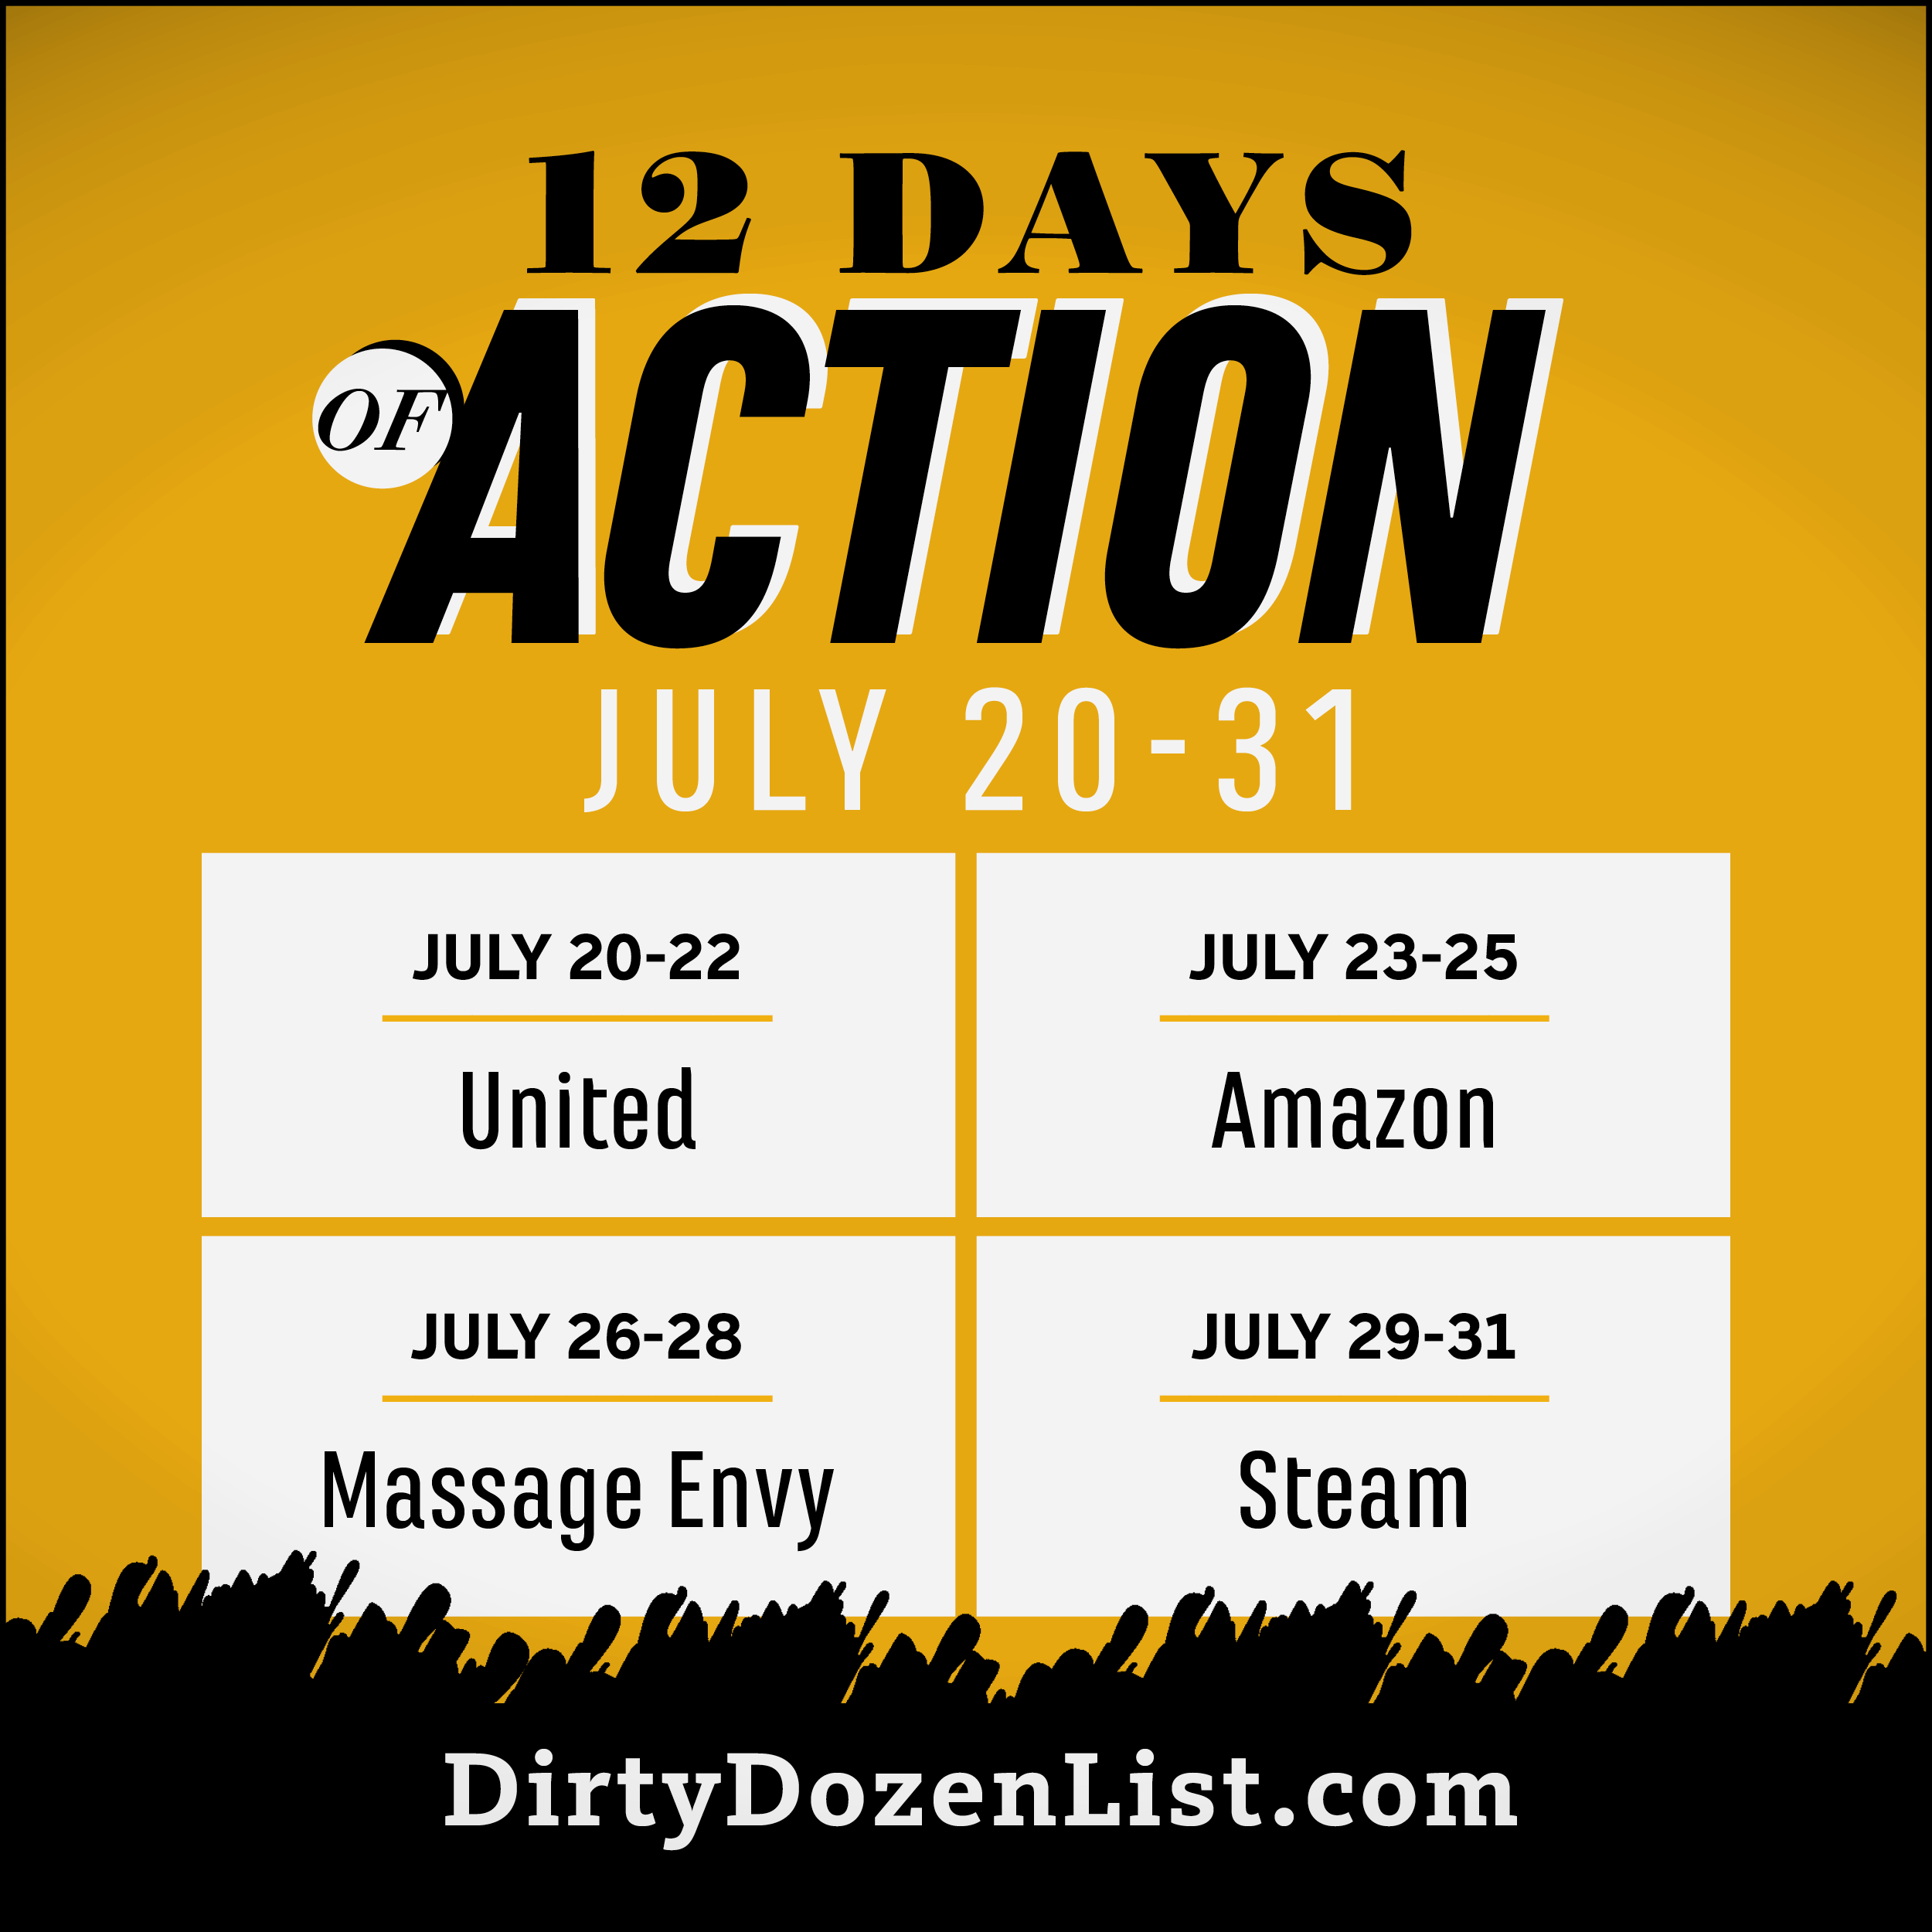 2019 12 Days of Action calendar